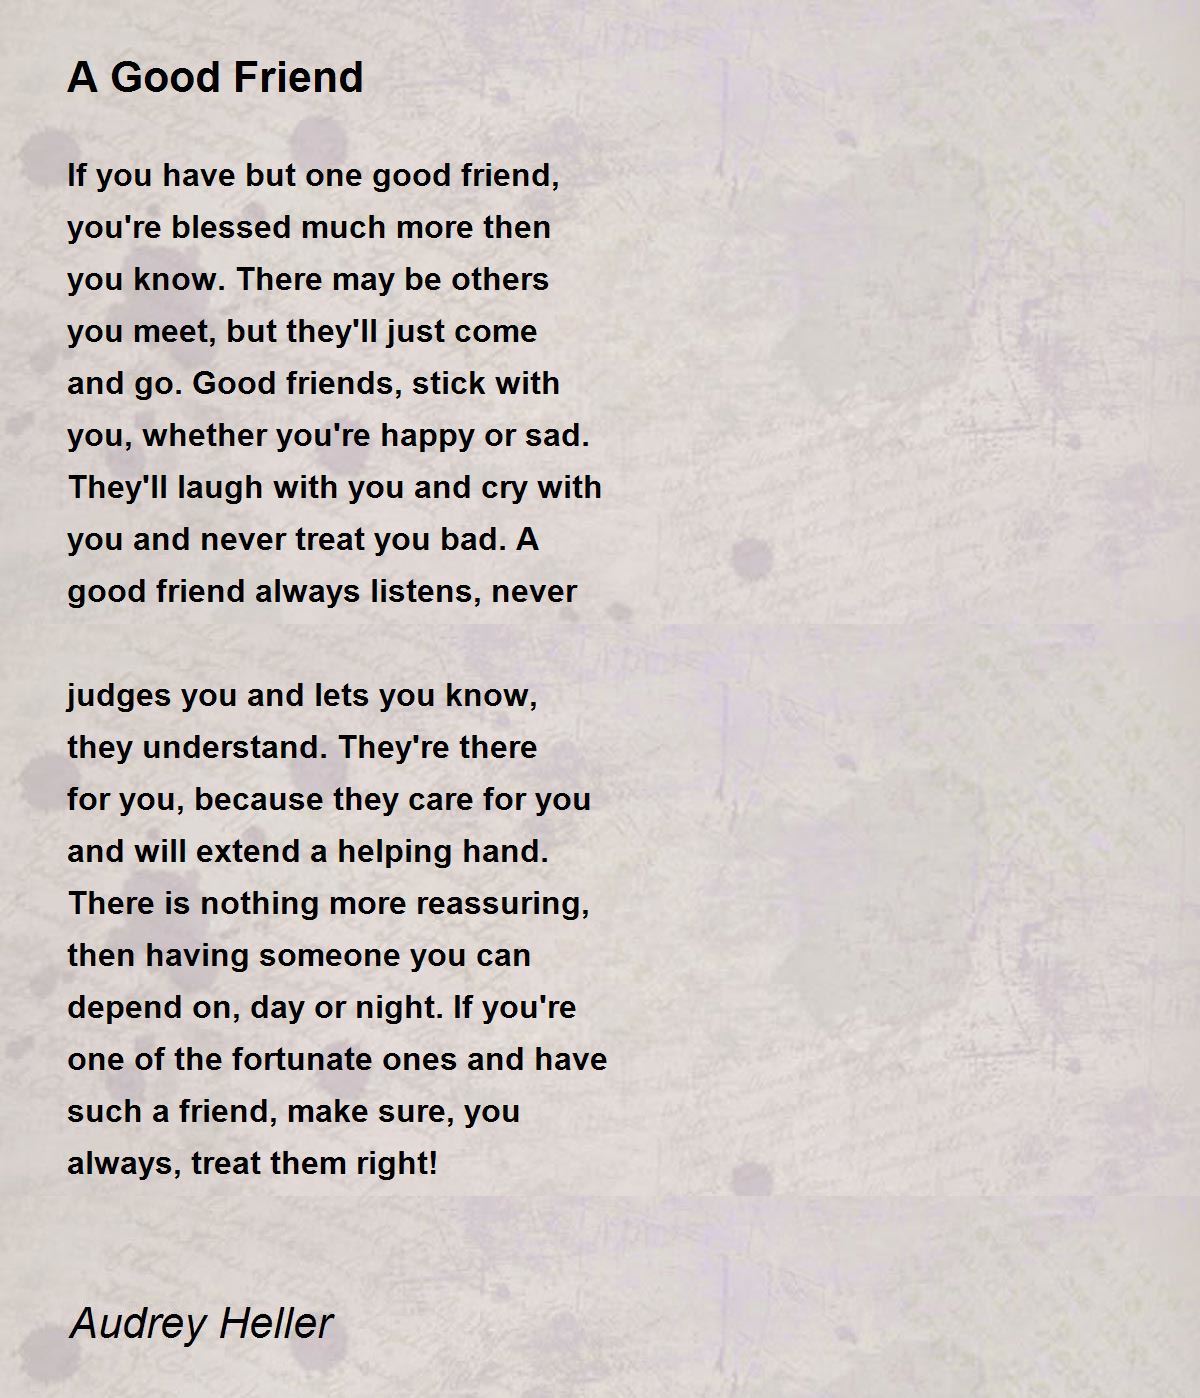 A Good Friend - A Good Friend Poem by Audrey Heller